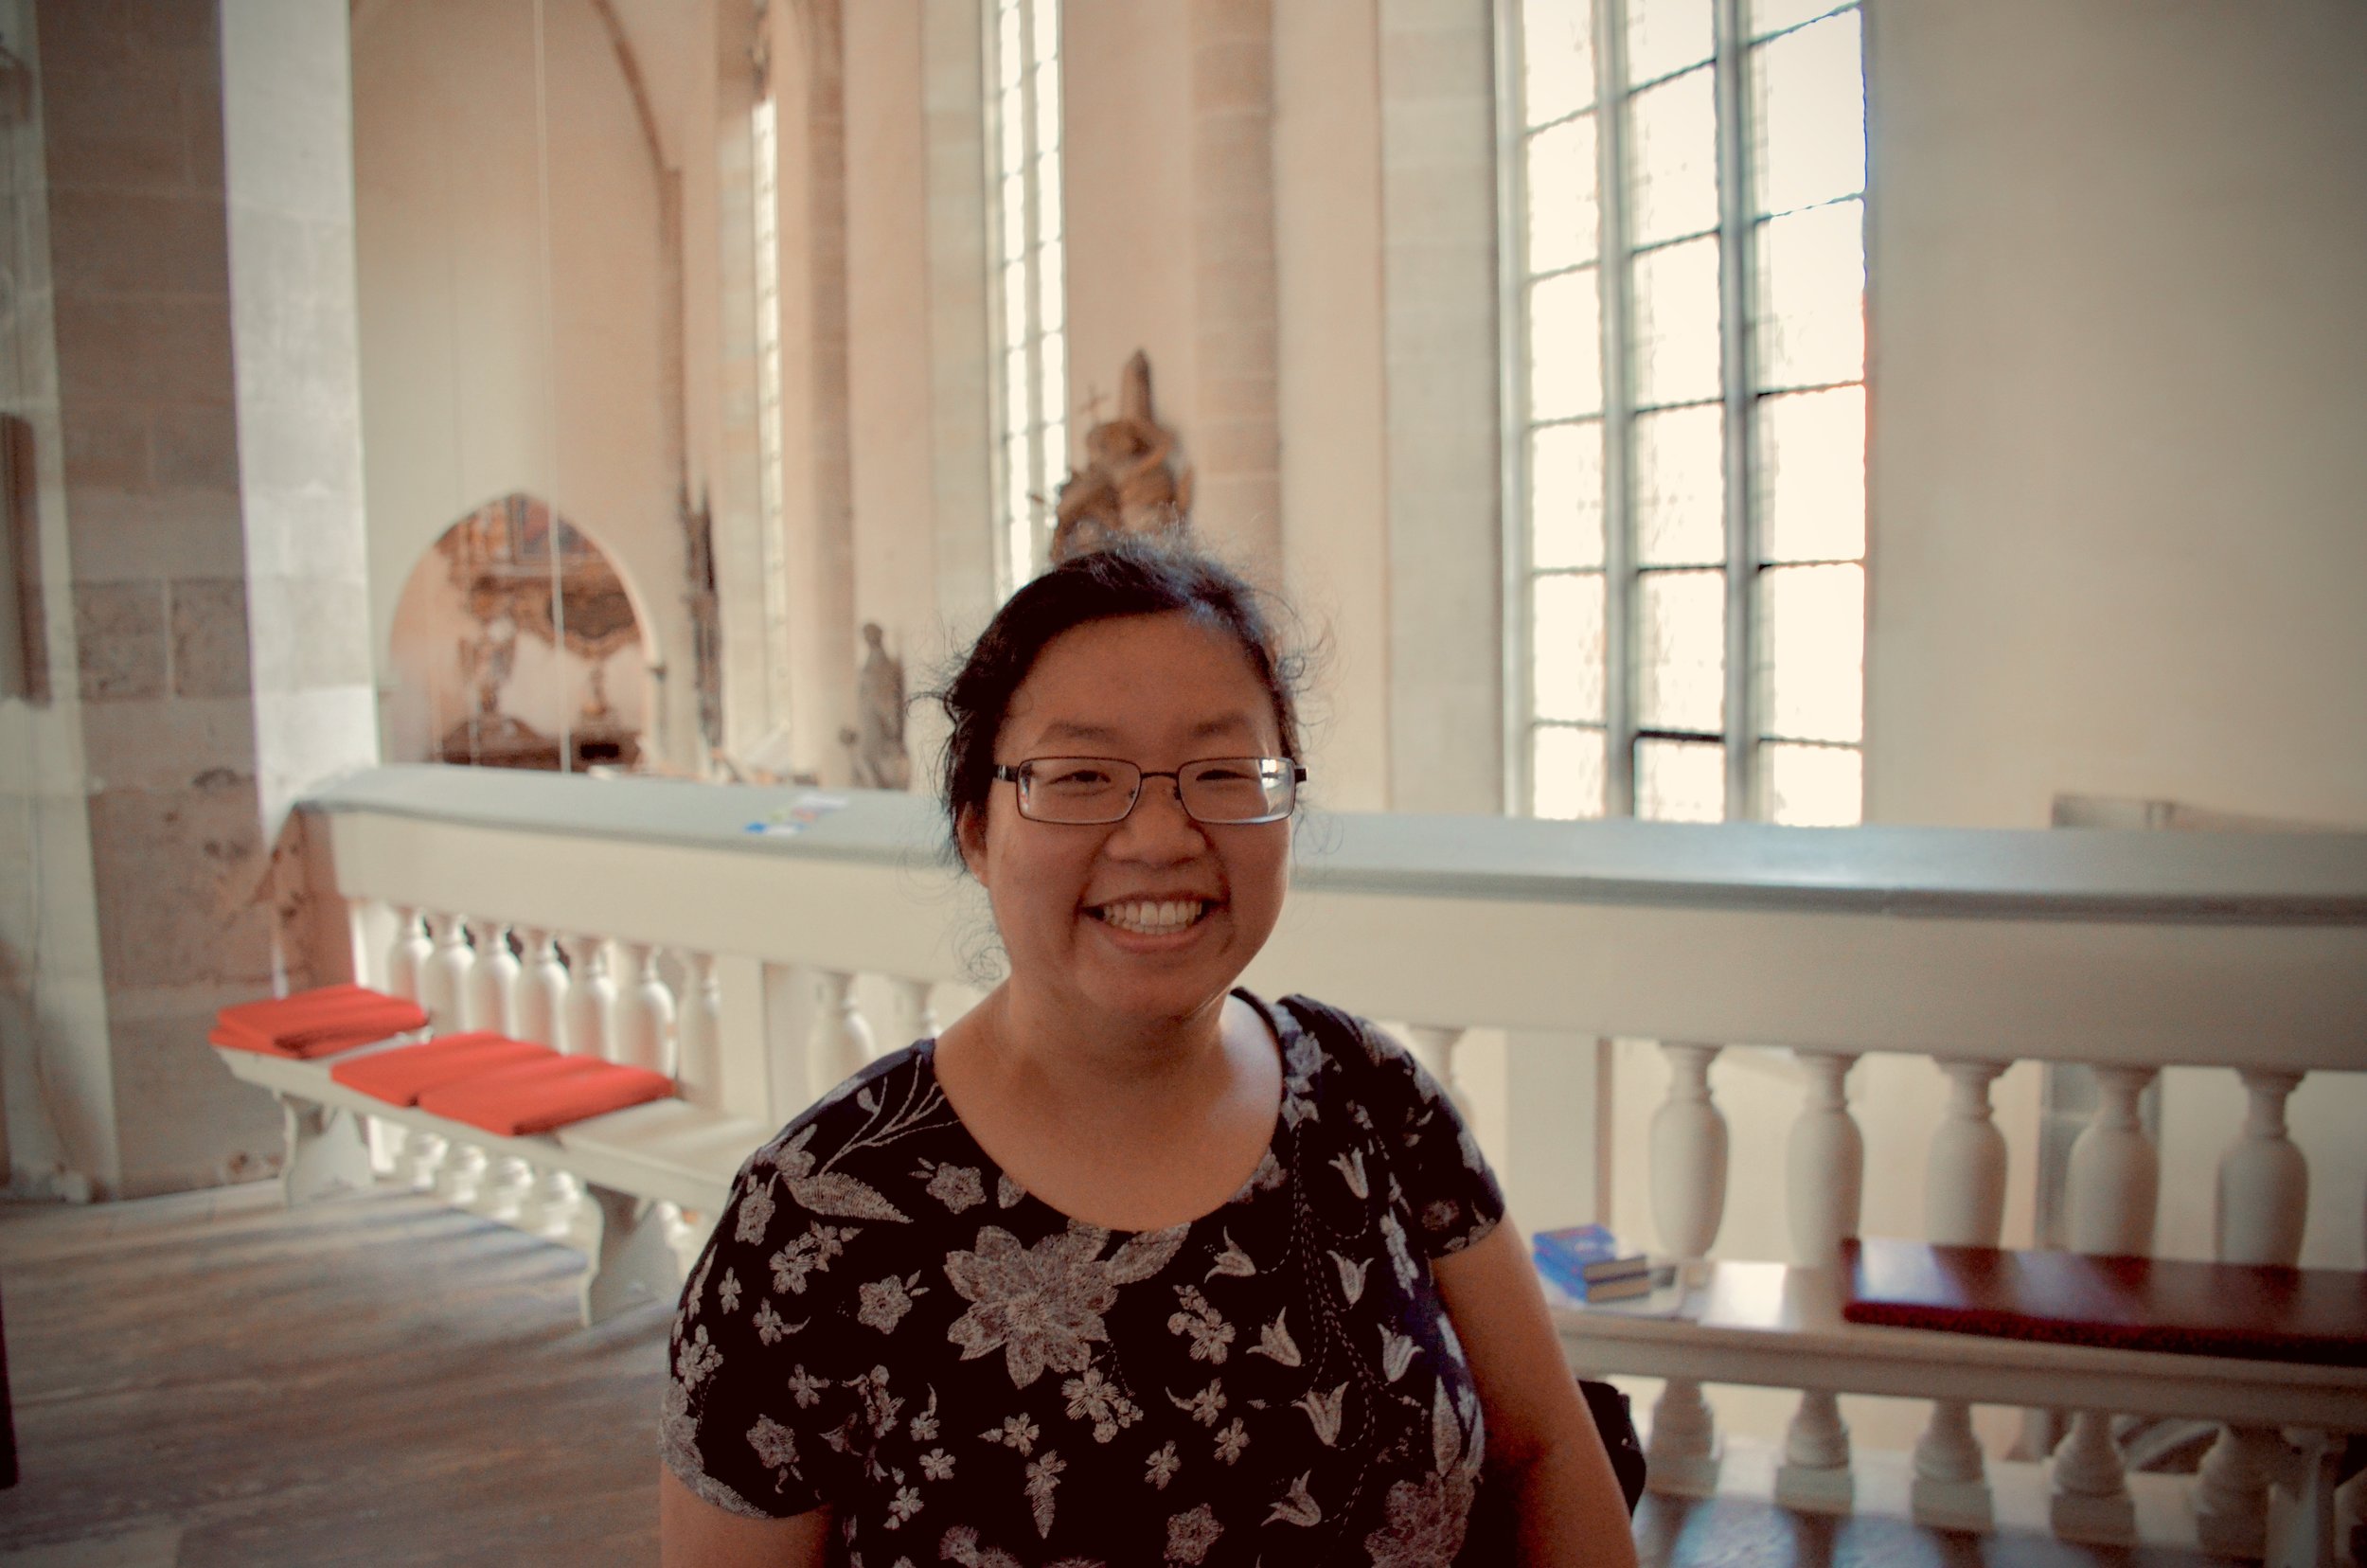  Jennifer Hsiao at Merseburg Dom.  